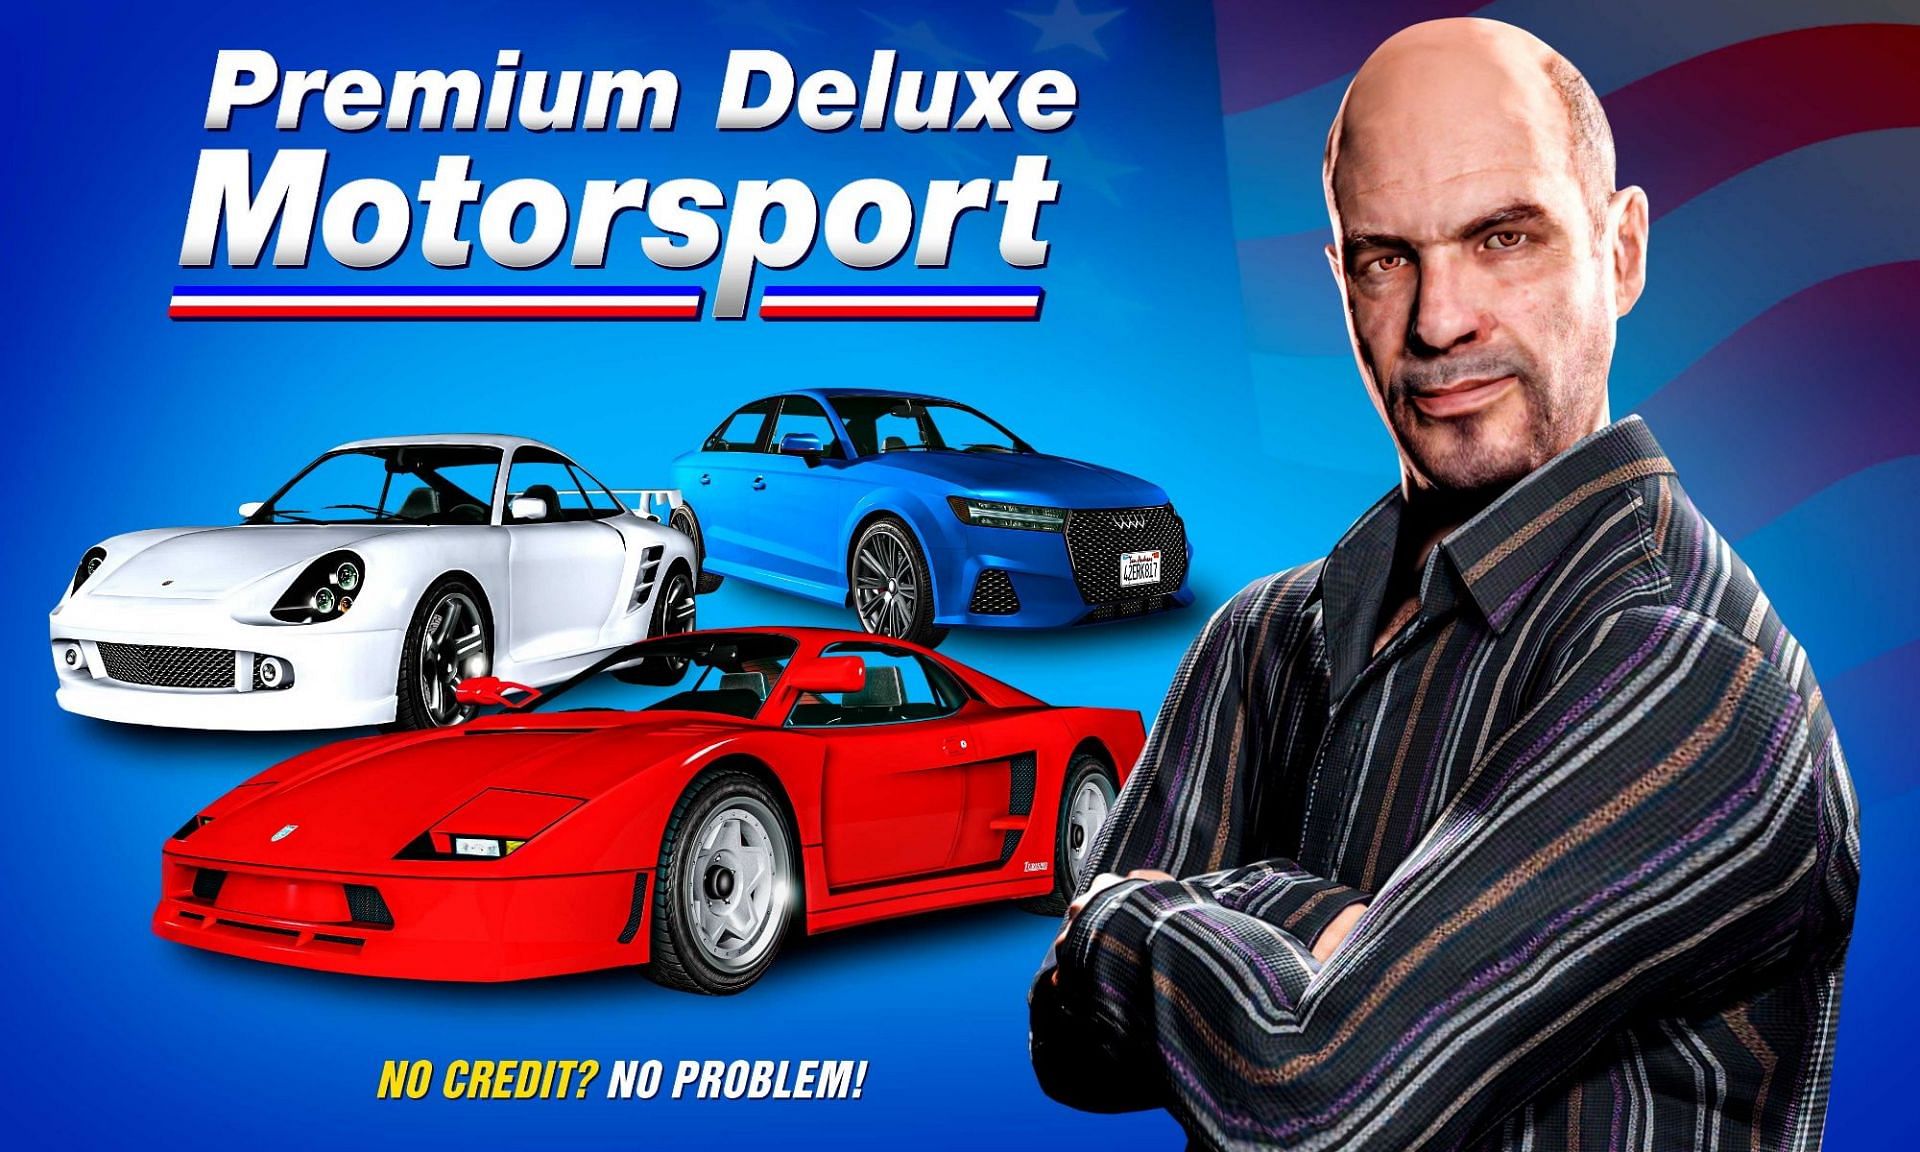 Simeon runs the Premium Deluxe Motorsport (Image via Rockstar Games)